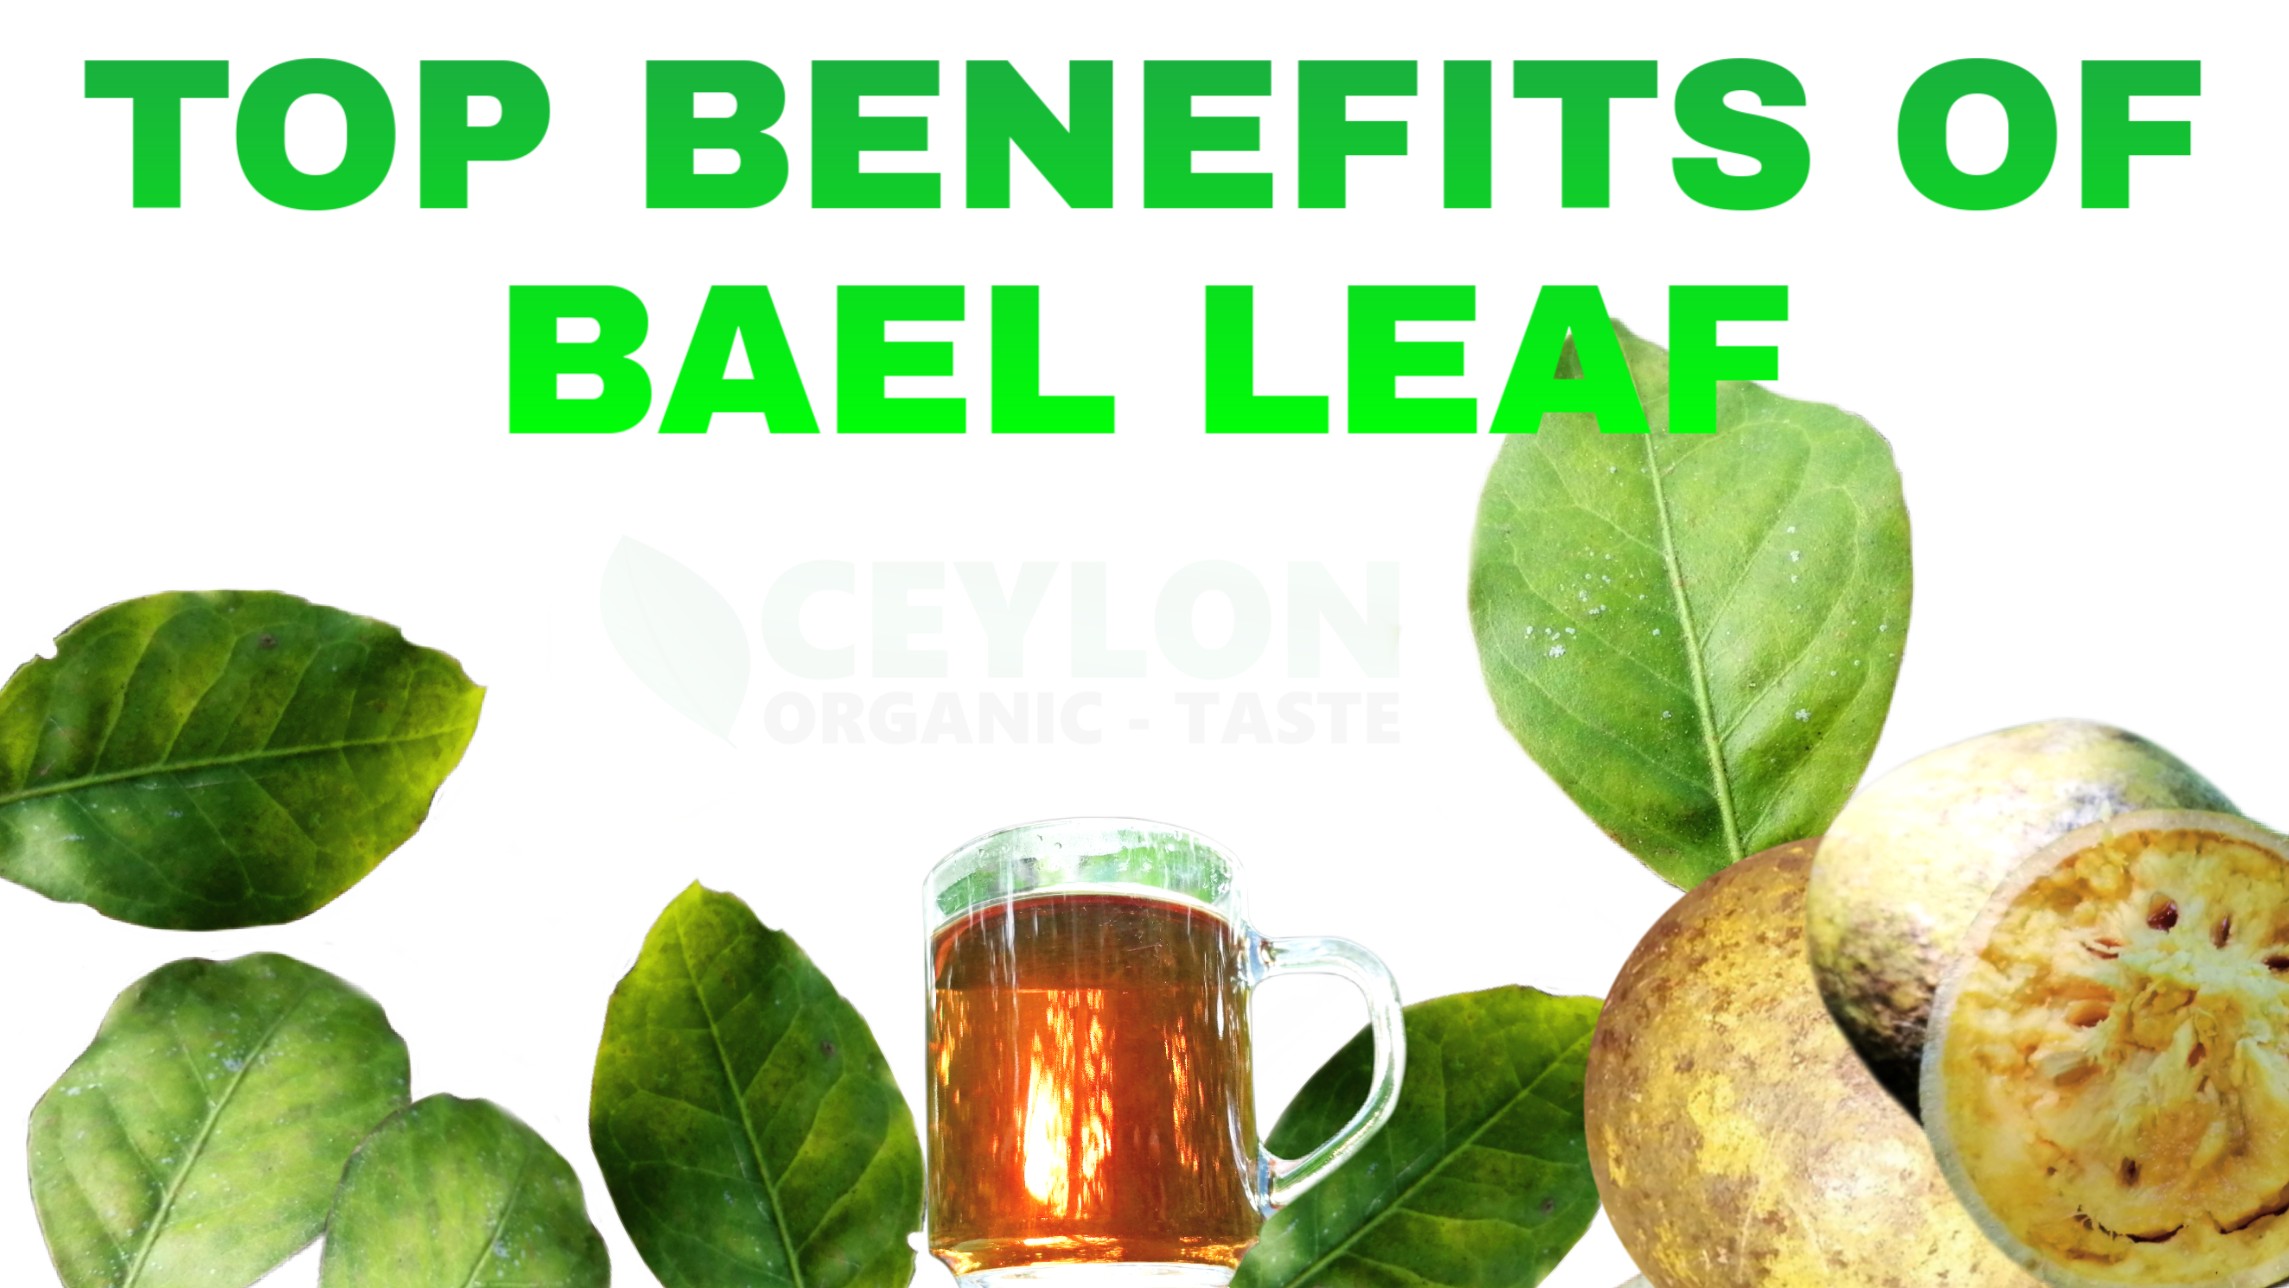 Top Benefits of Bael leaf